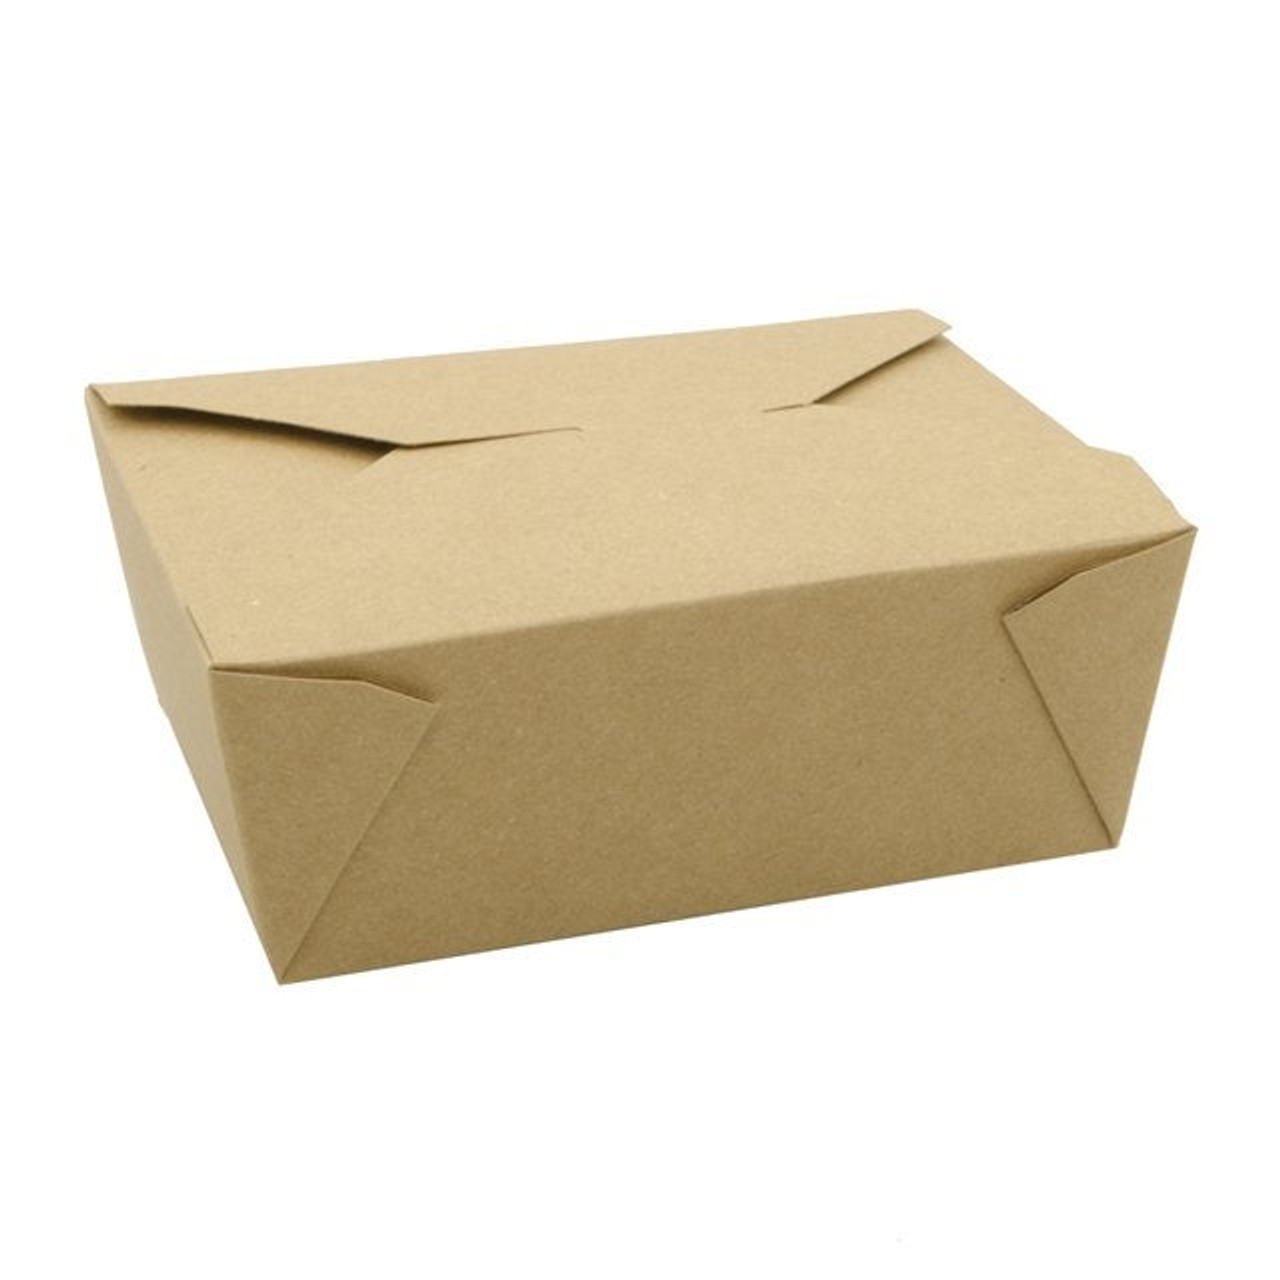 Gordon Choice Natural Paper Containers, 2.5X6.75X5.5In, Bioplus #8, Ecology Friendly | 50UN/Unit, 6 Units/Case